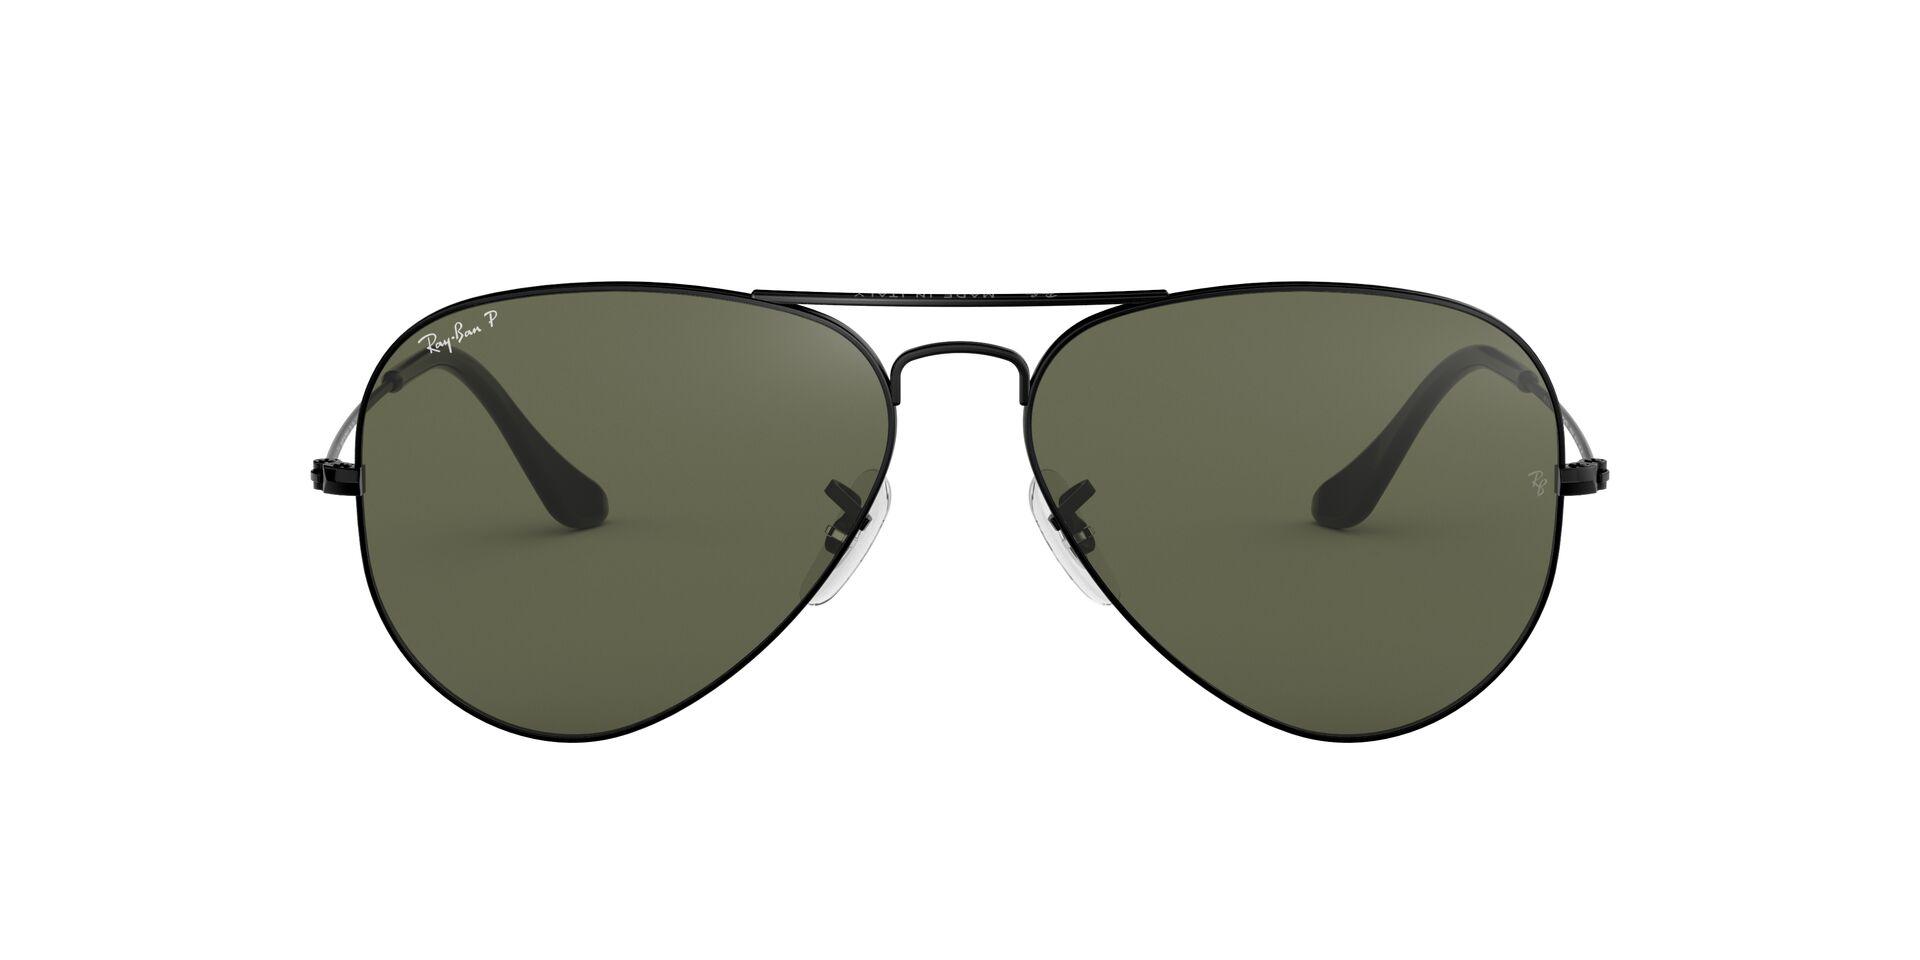 Mắt Kính Ray-Ban Aviator Large Metal - RB3025 002/58 -Sunglasses